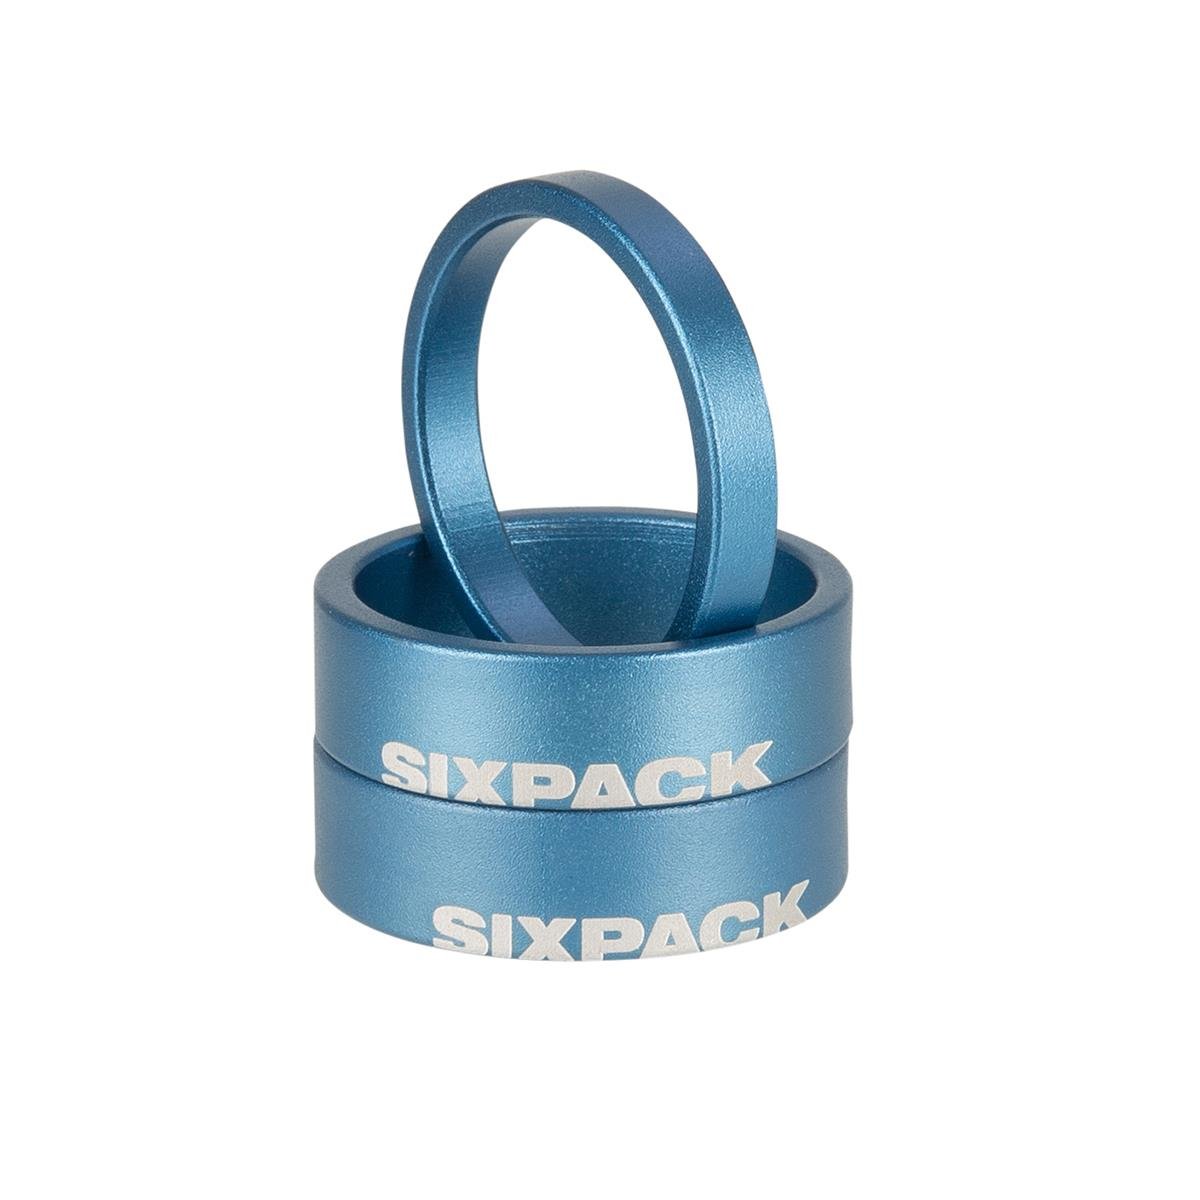 Sixpack Kit Distanziali Serie Sterzo Menace Blu, 1 1/8 Pollici, 3 Parti